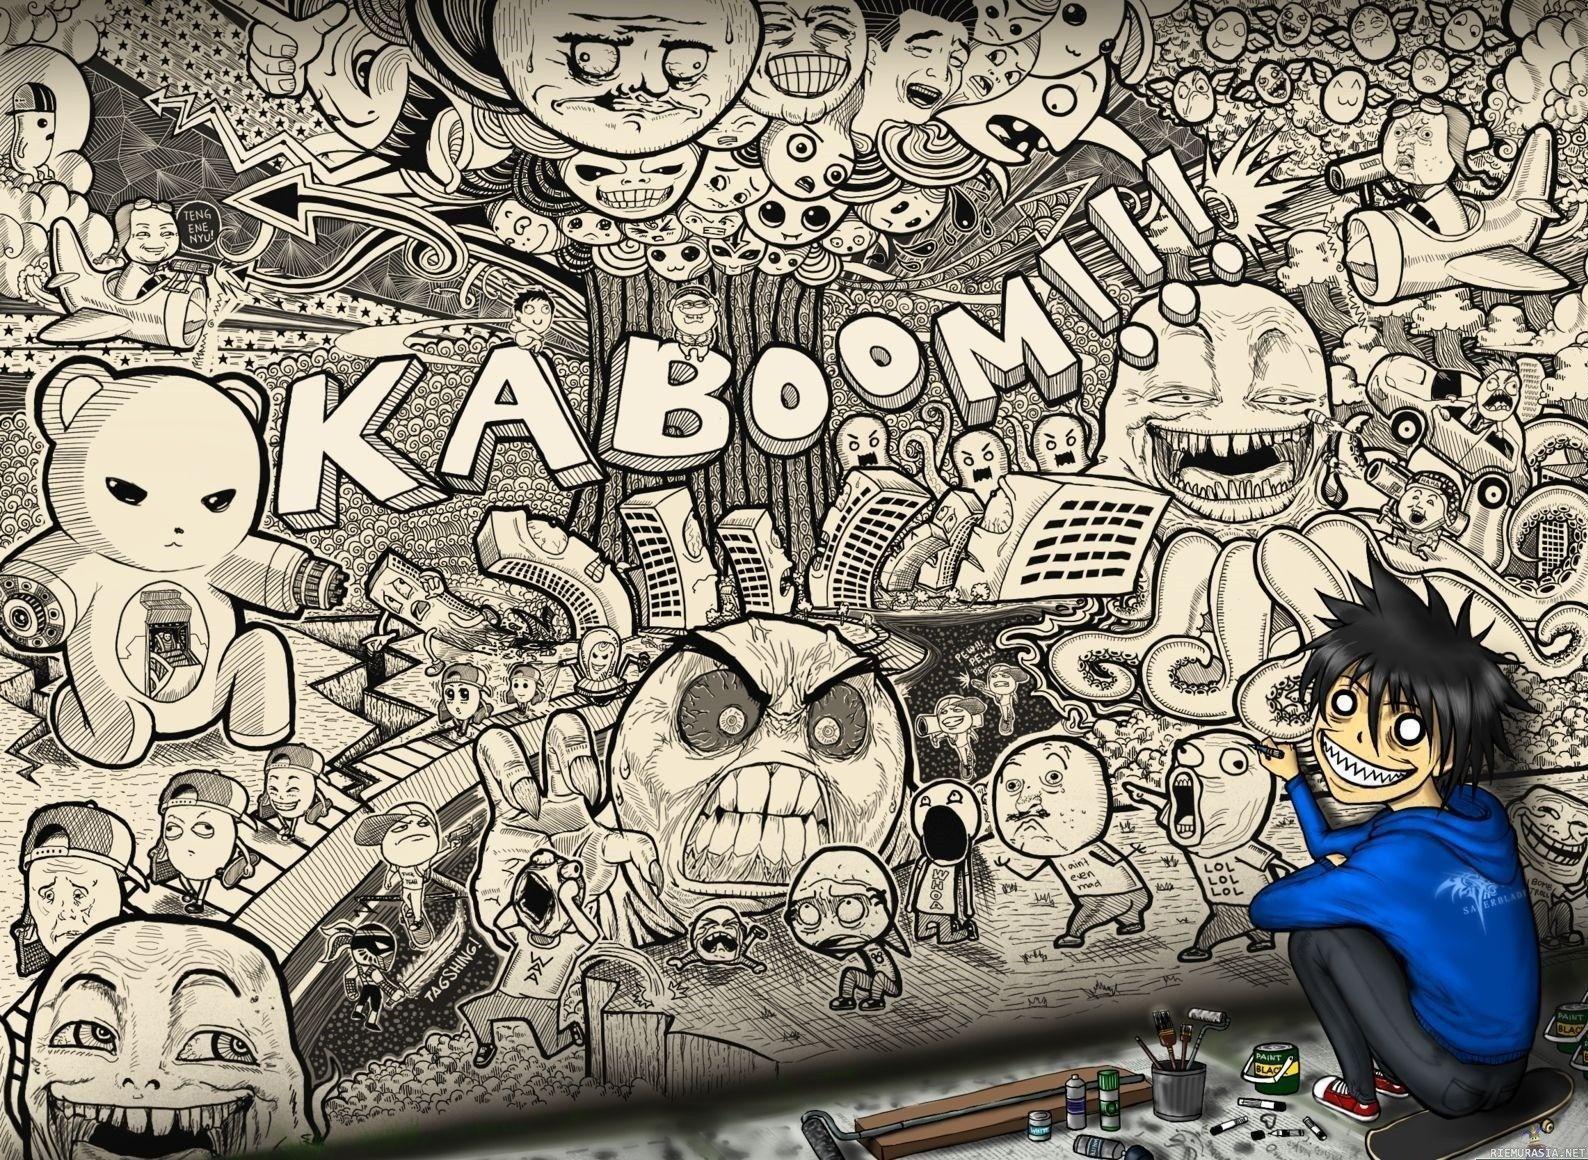 Free Download Kaboom Graffiti 2609 HD Wallpaper Picture. Top